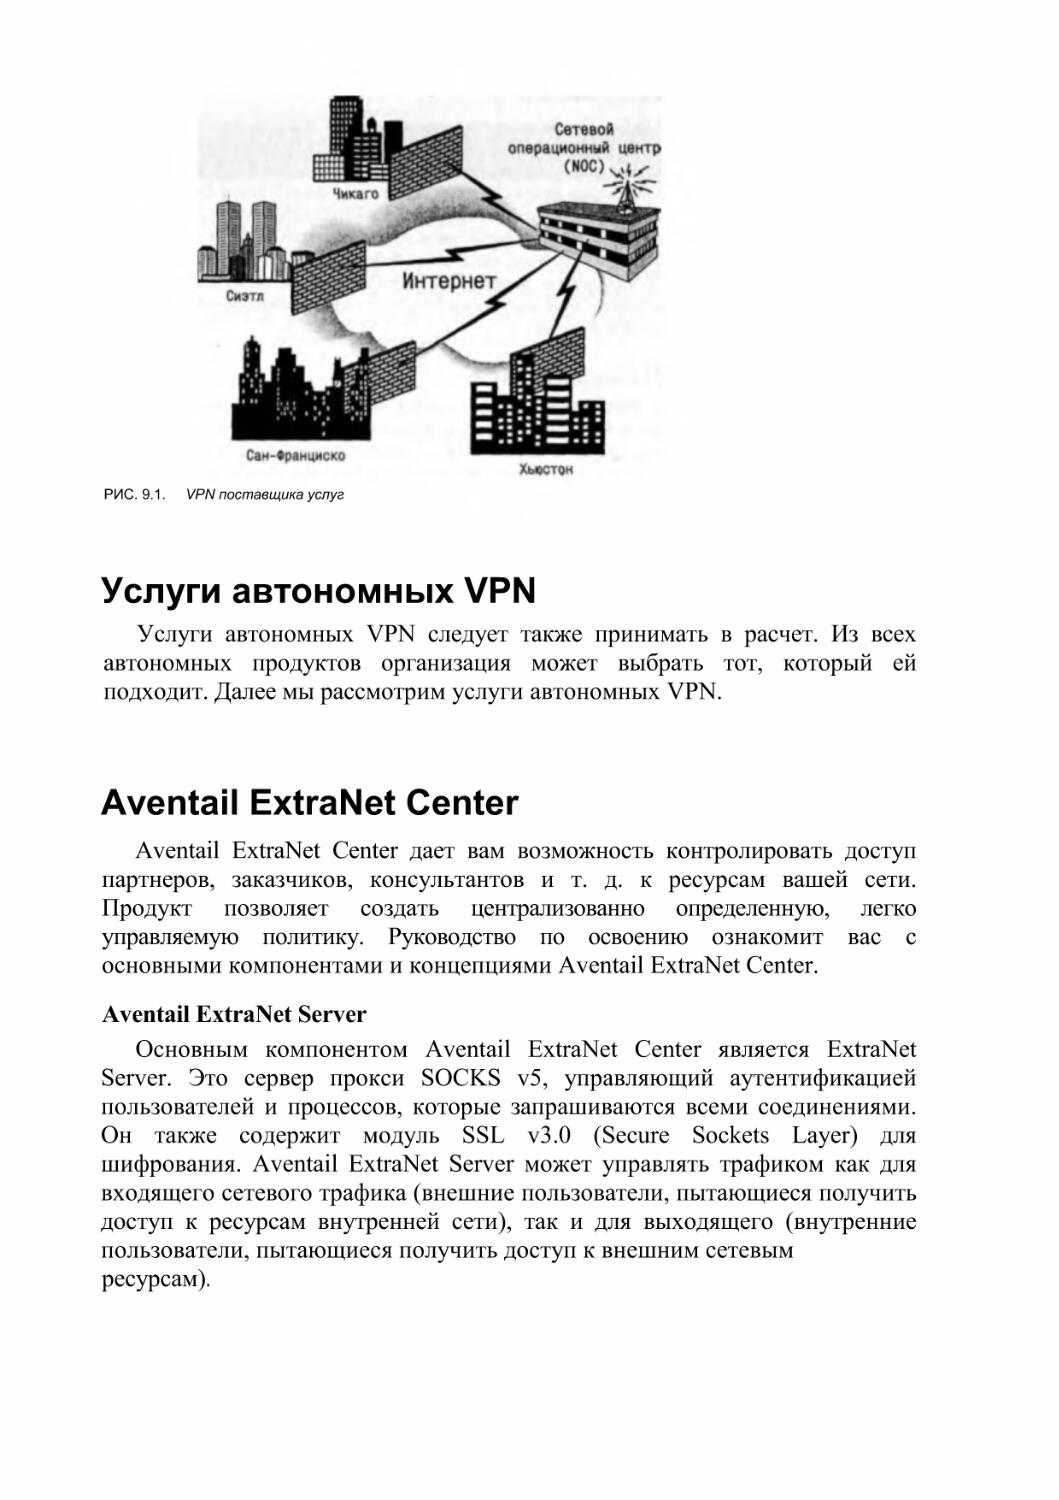 Aventail ExtraNet Center